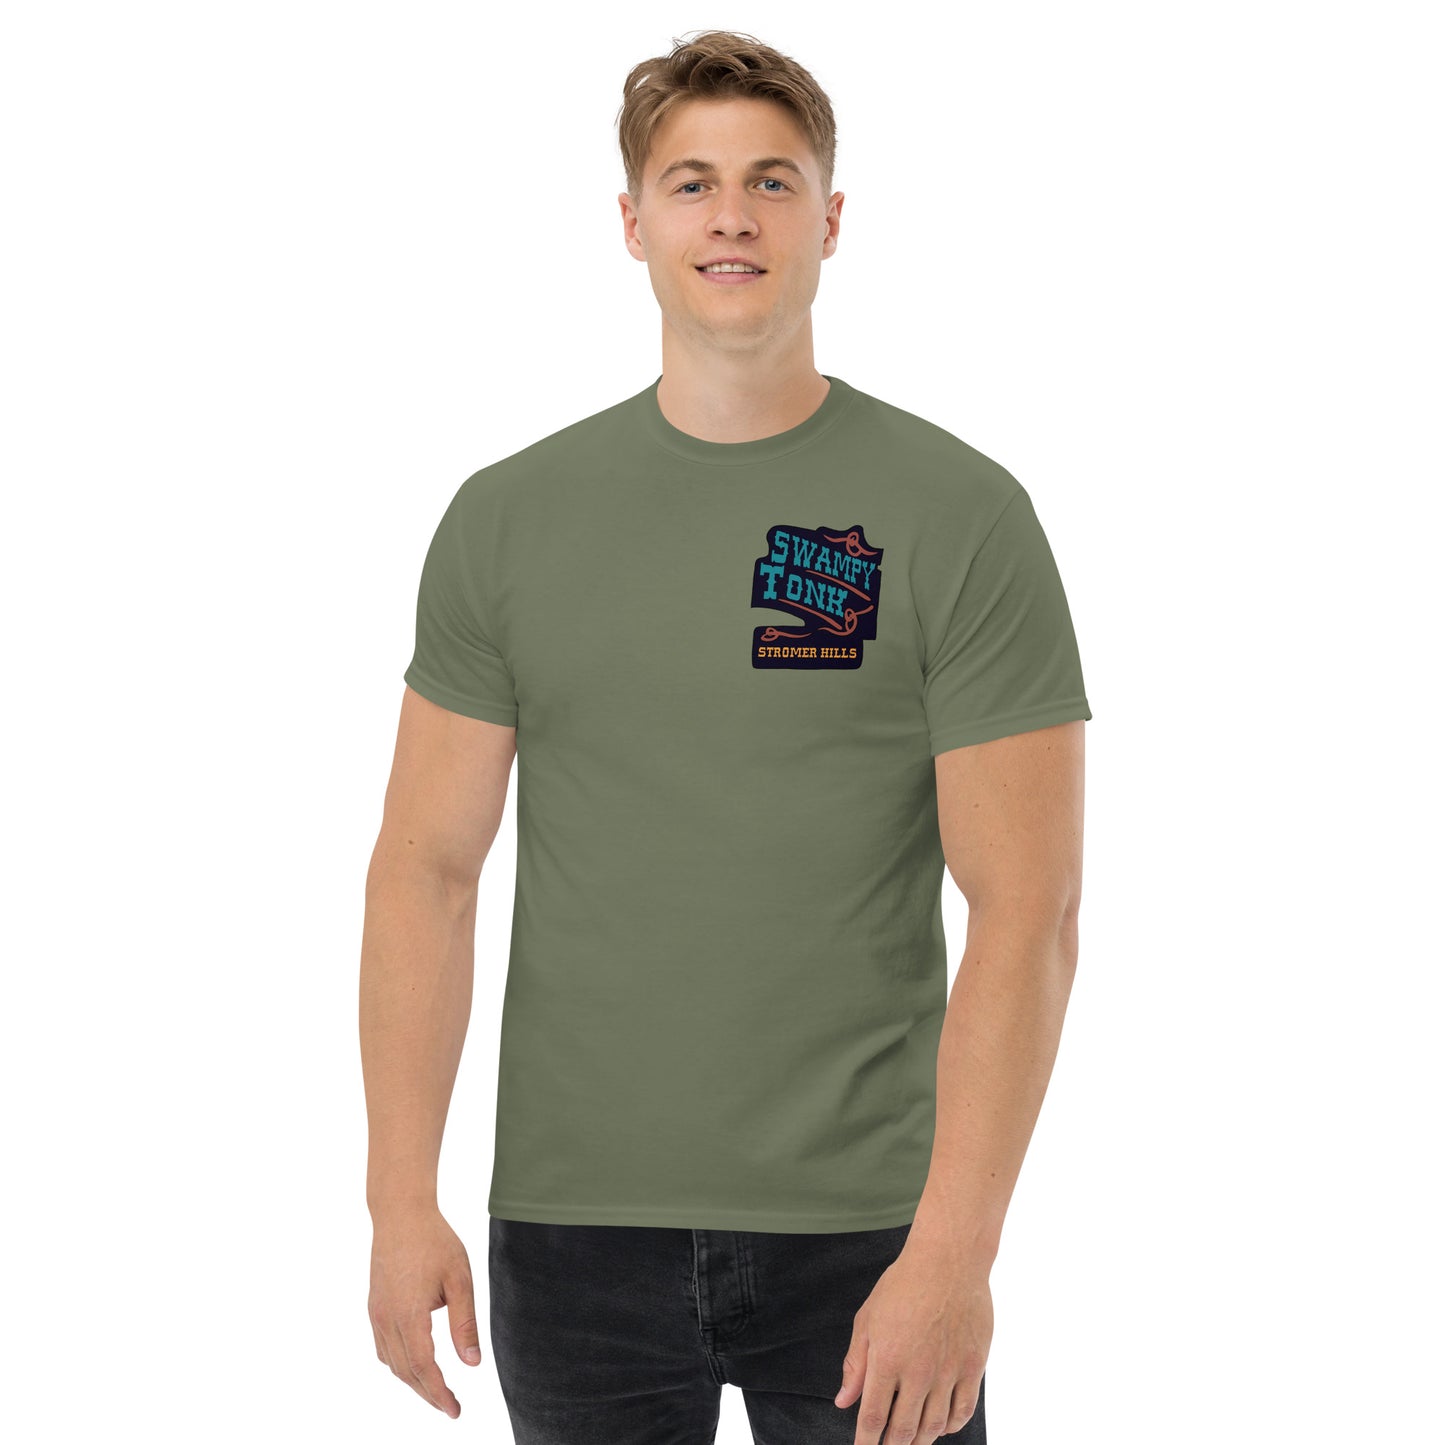 "Swampy Tonk" Crest Shirt